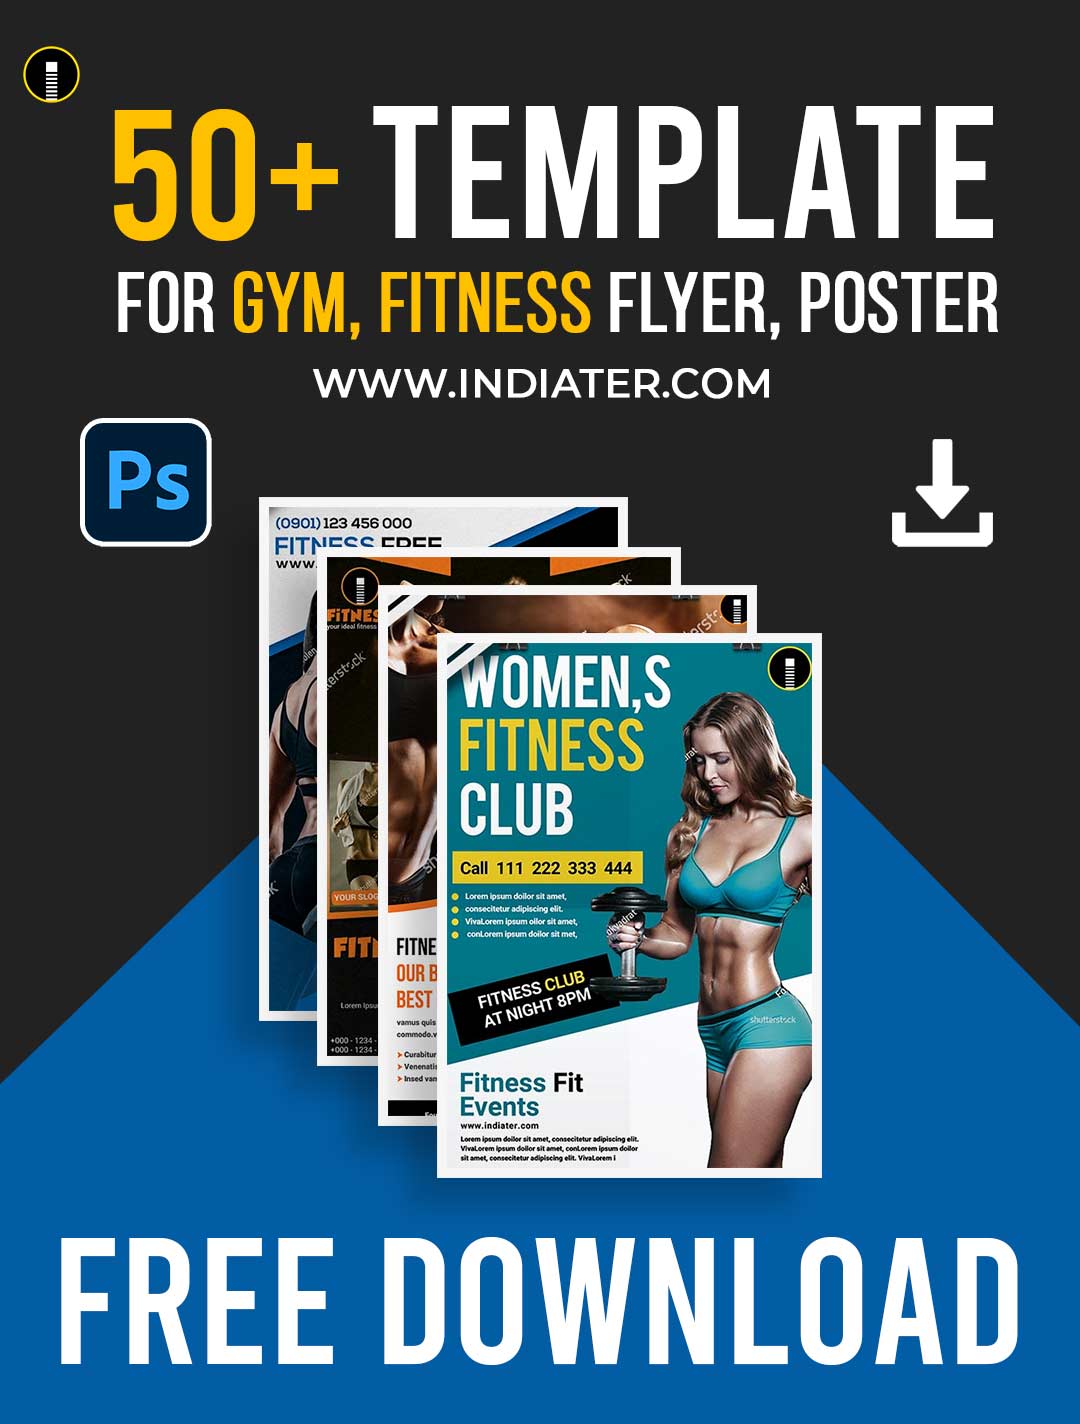 Free printable workout poster templates